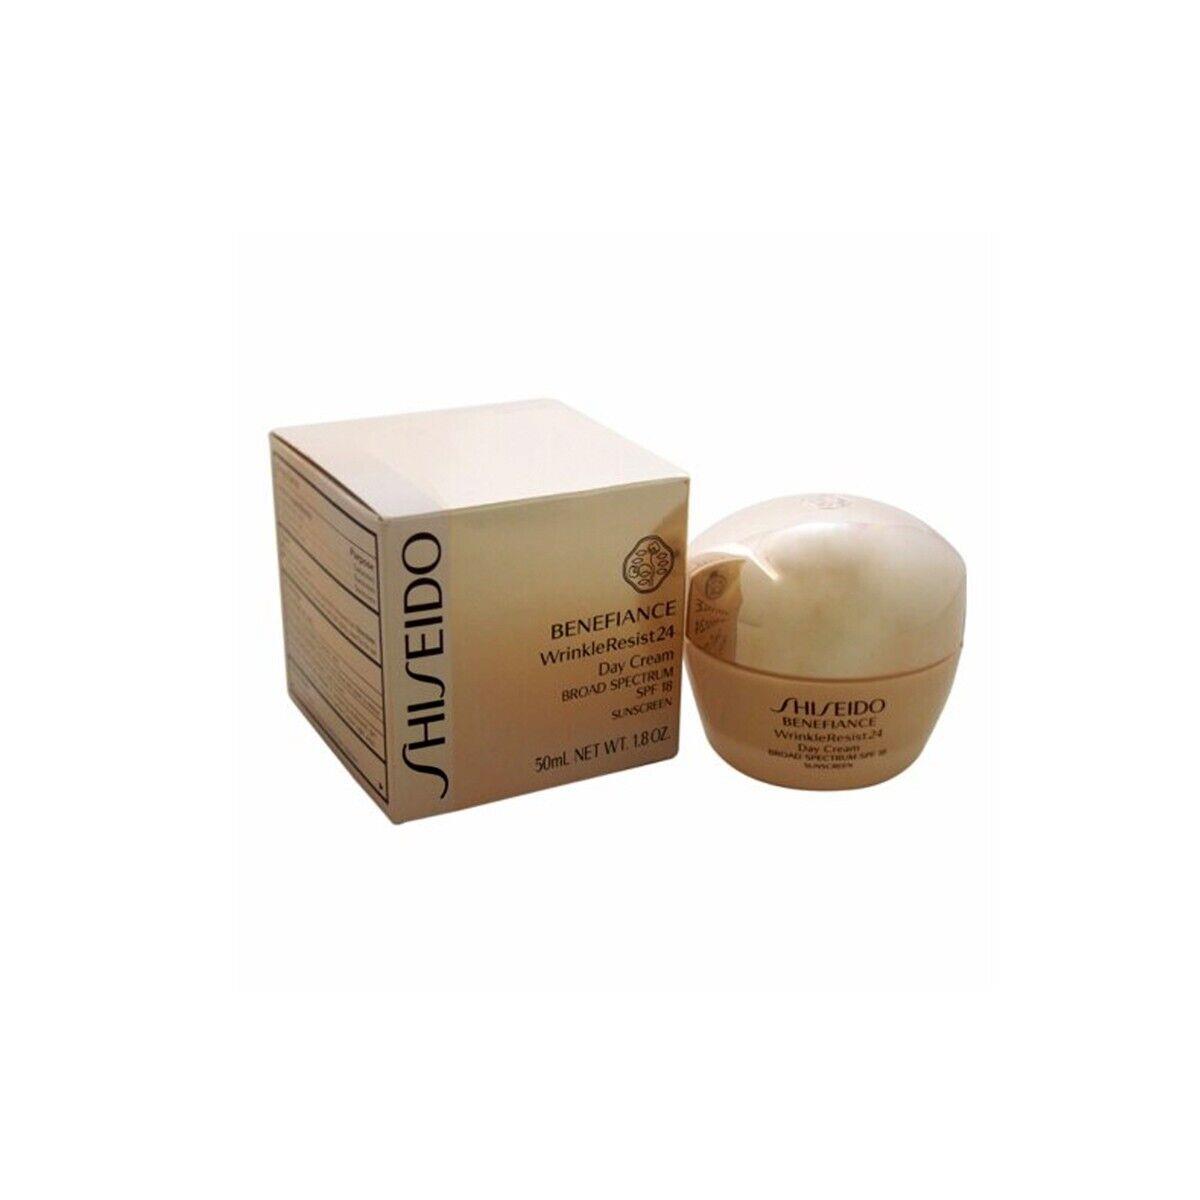 Shiseido Benefiance WrinkleResist24 Day Cream SPF18 - Size 50mL / 1.7 Oz